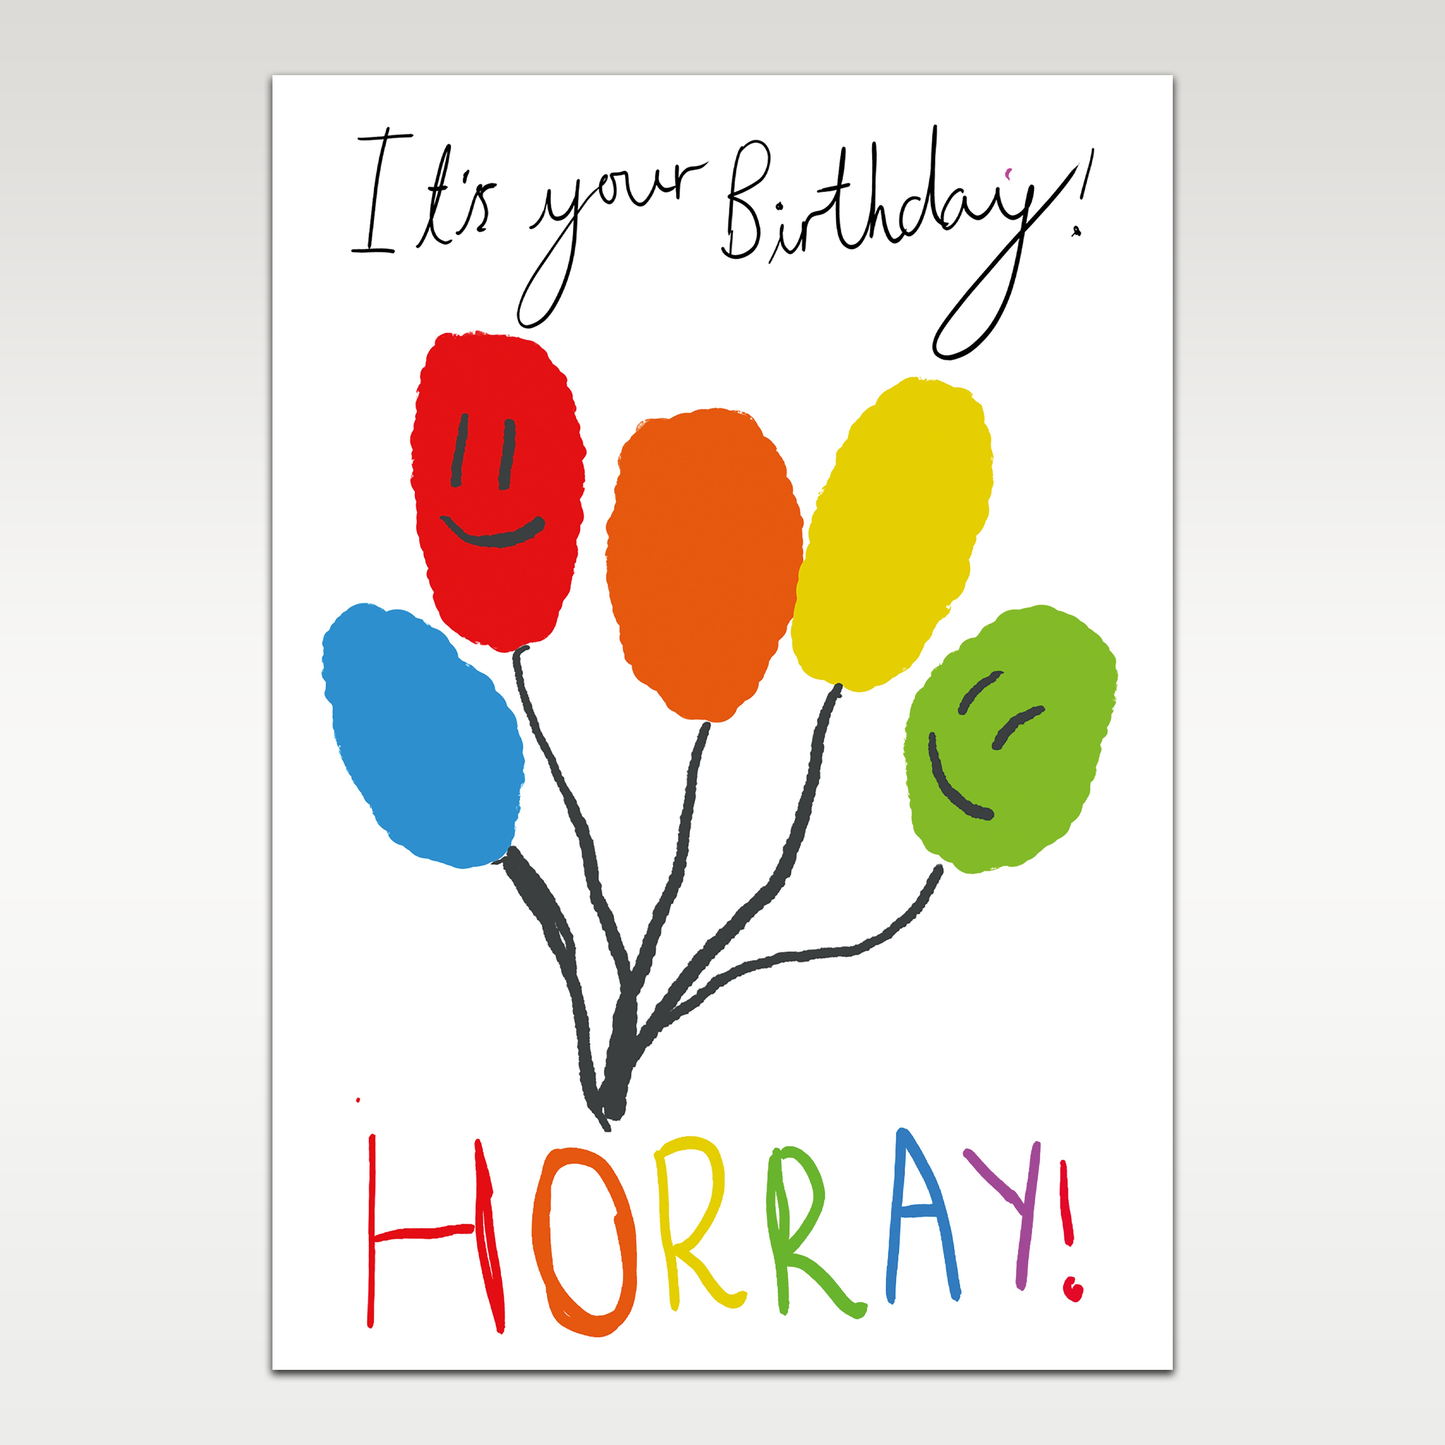 Hooray! Birthday Balloons Greetings card